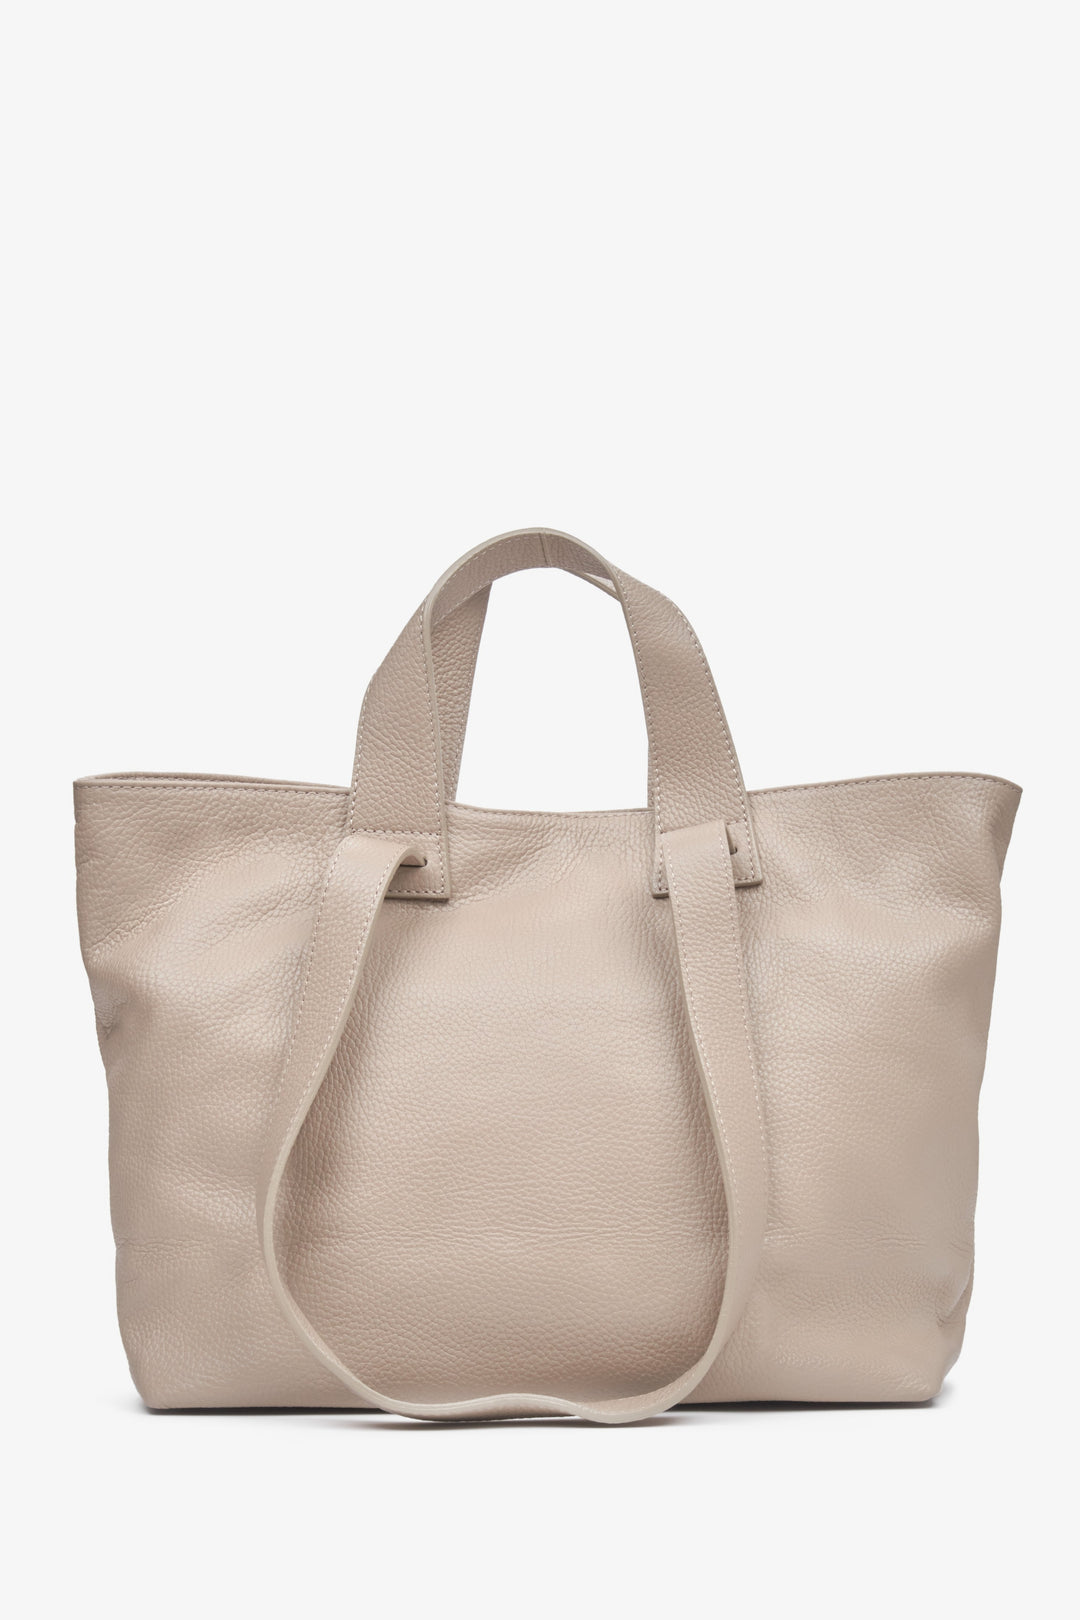 Women's large beige Estro handbag made from genuine leather.